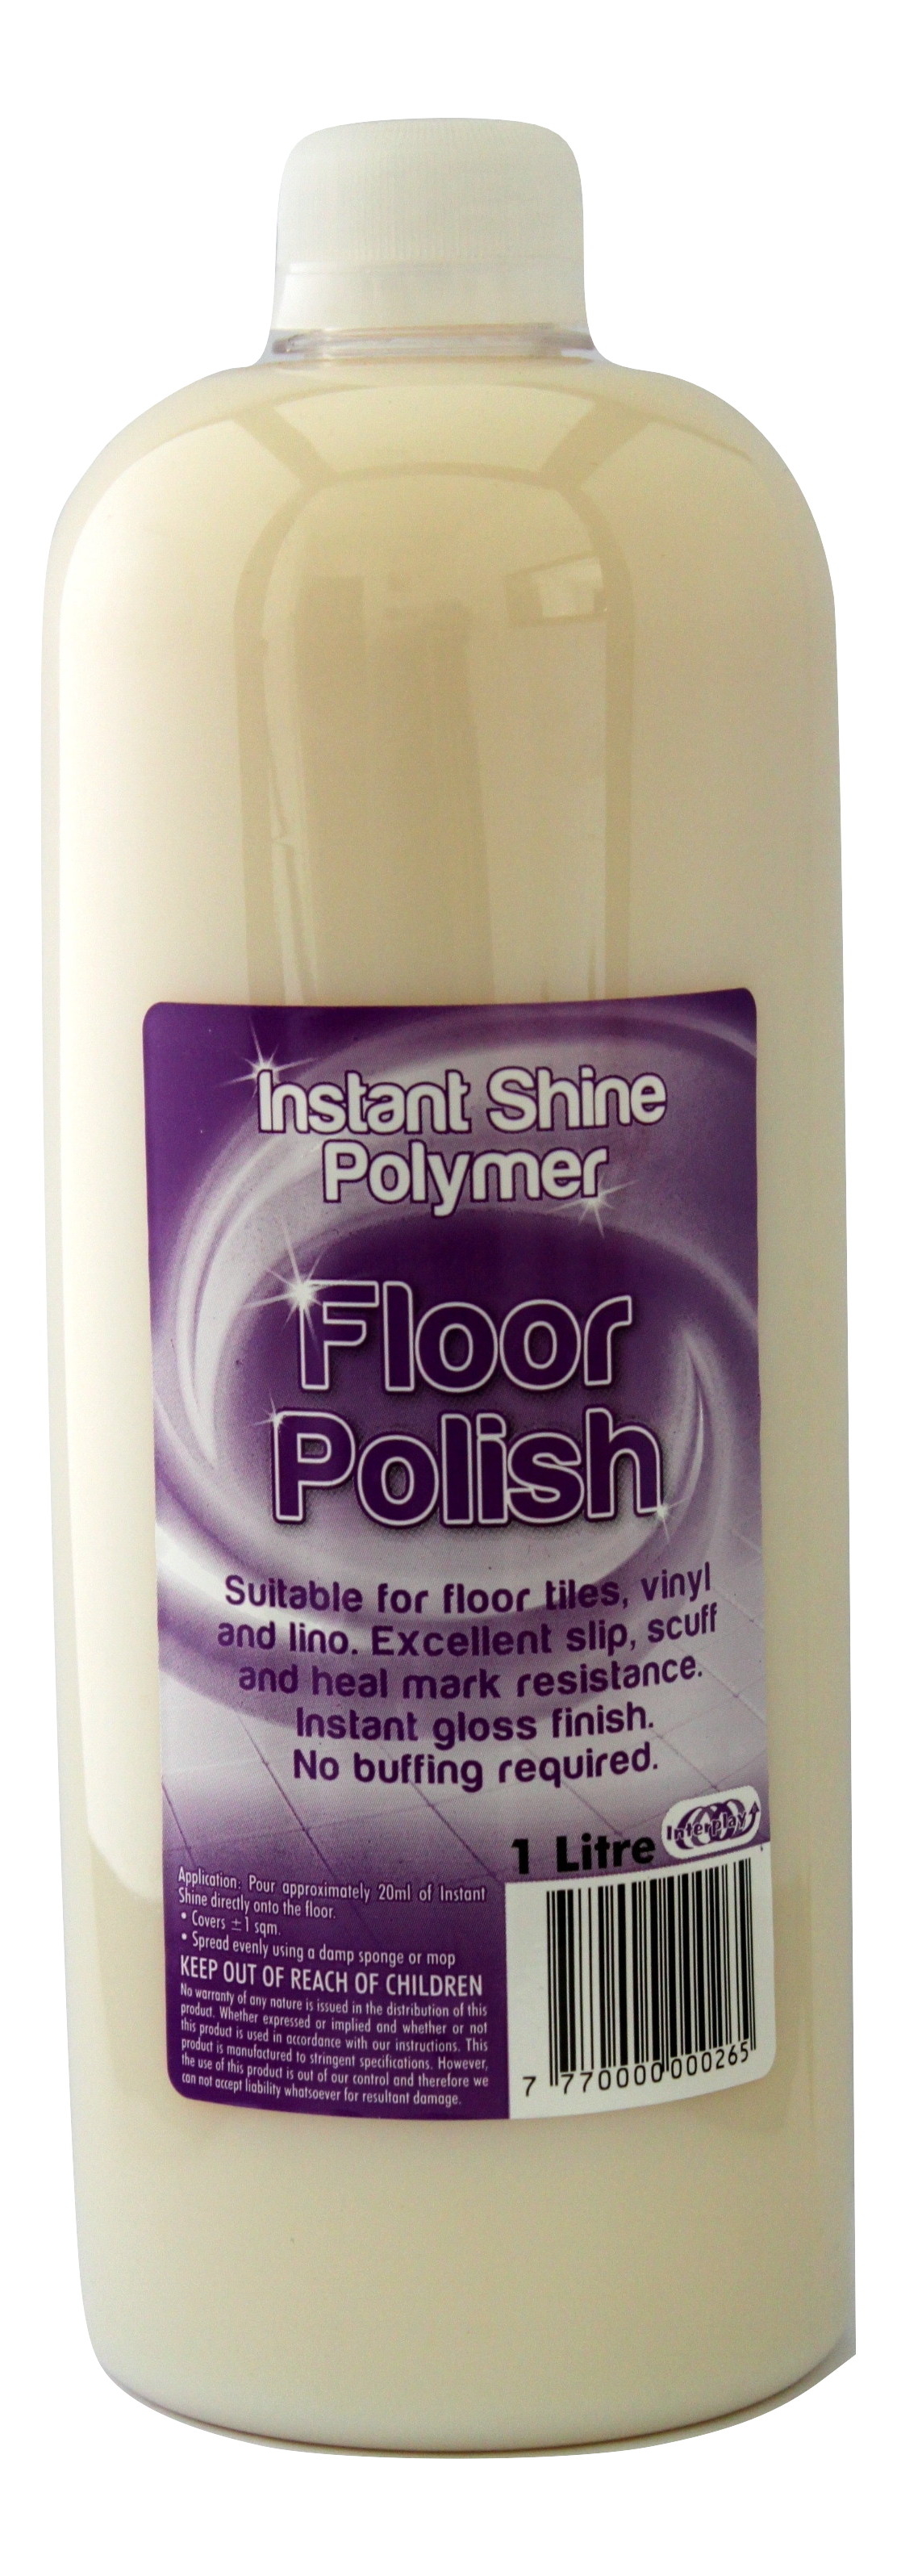 instant-shine-floor-polish--mop-and-shine